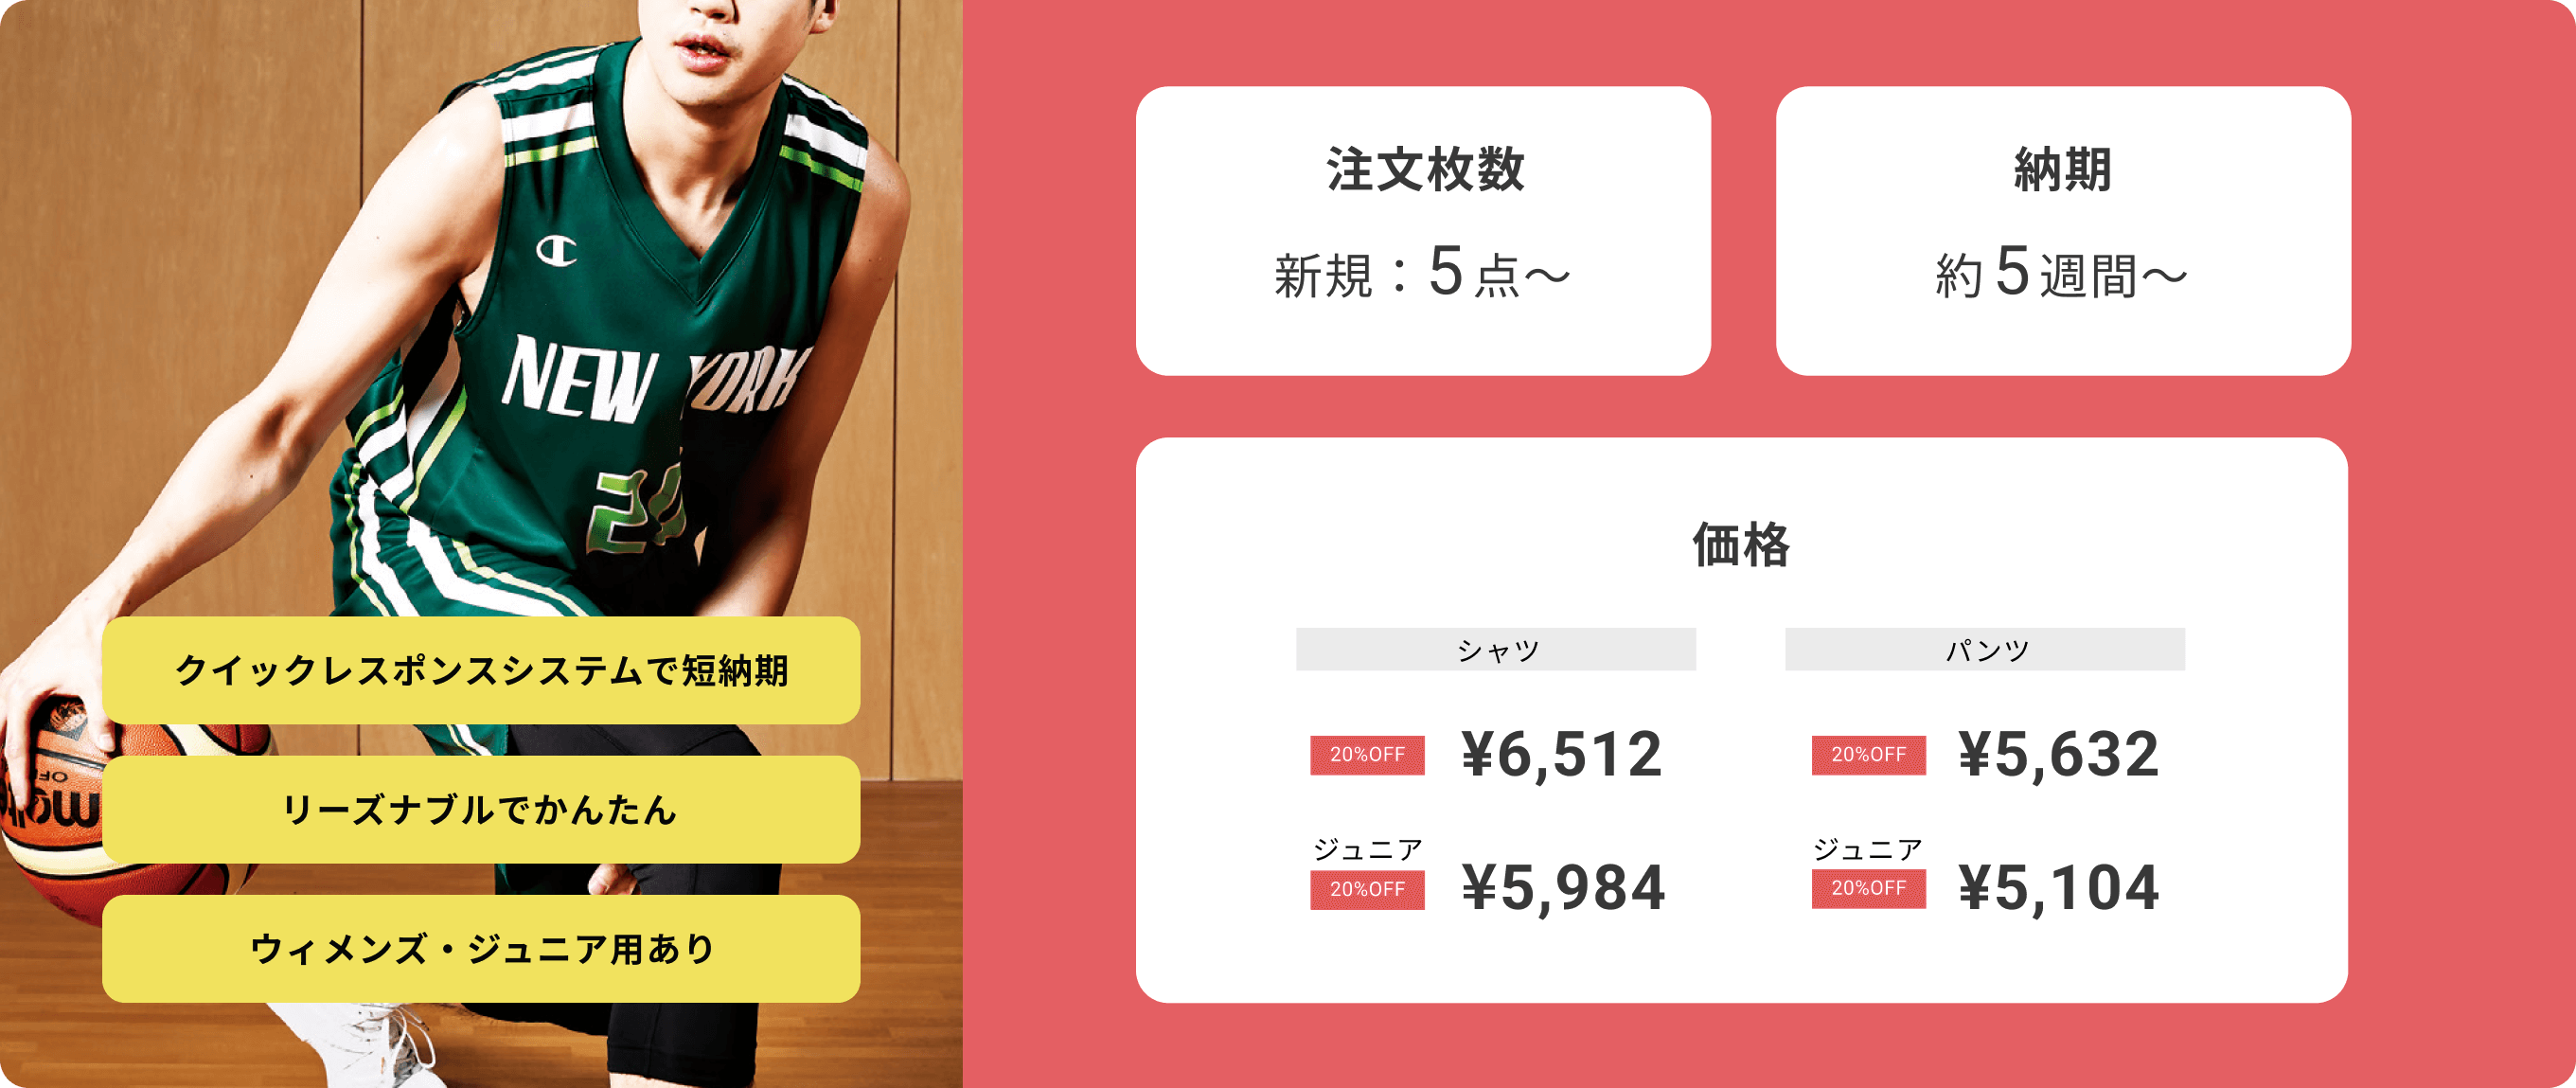 Champion 昇華ユニフォーム | バスケットボールユニフォーム製作 